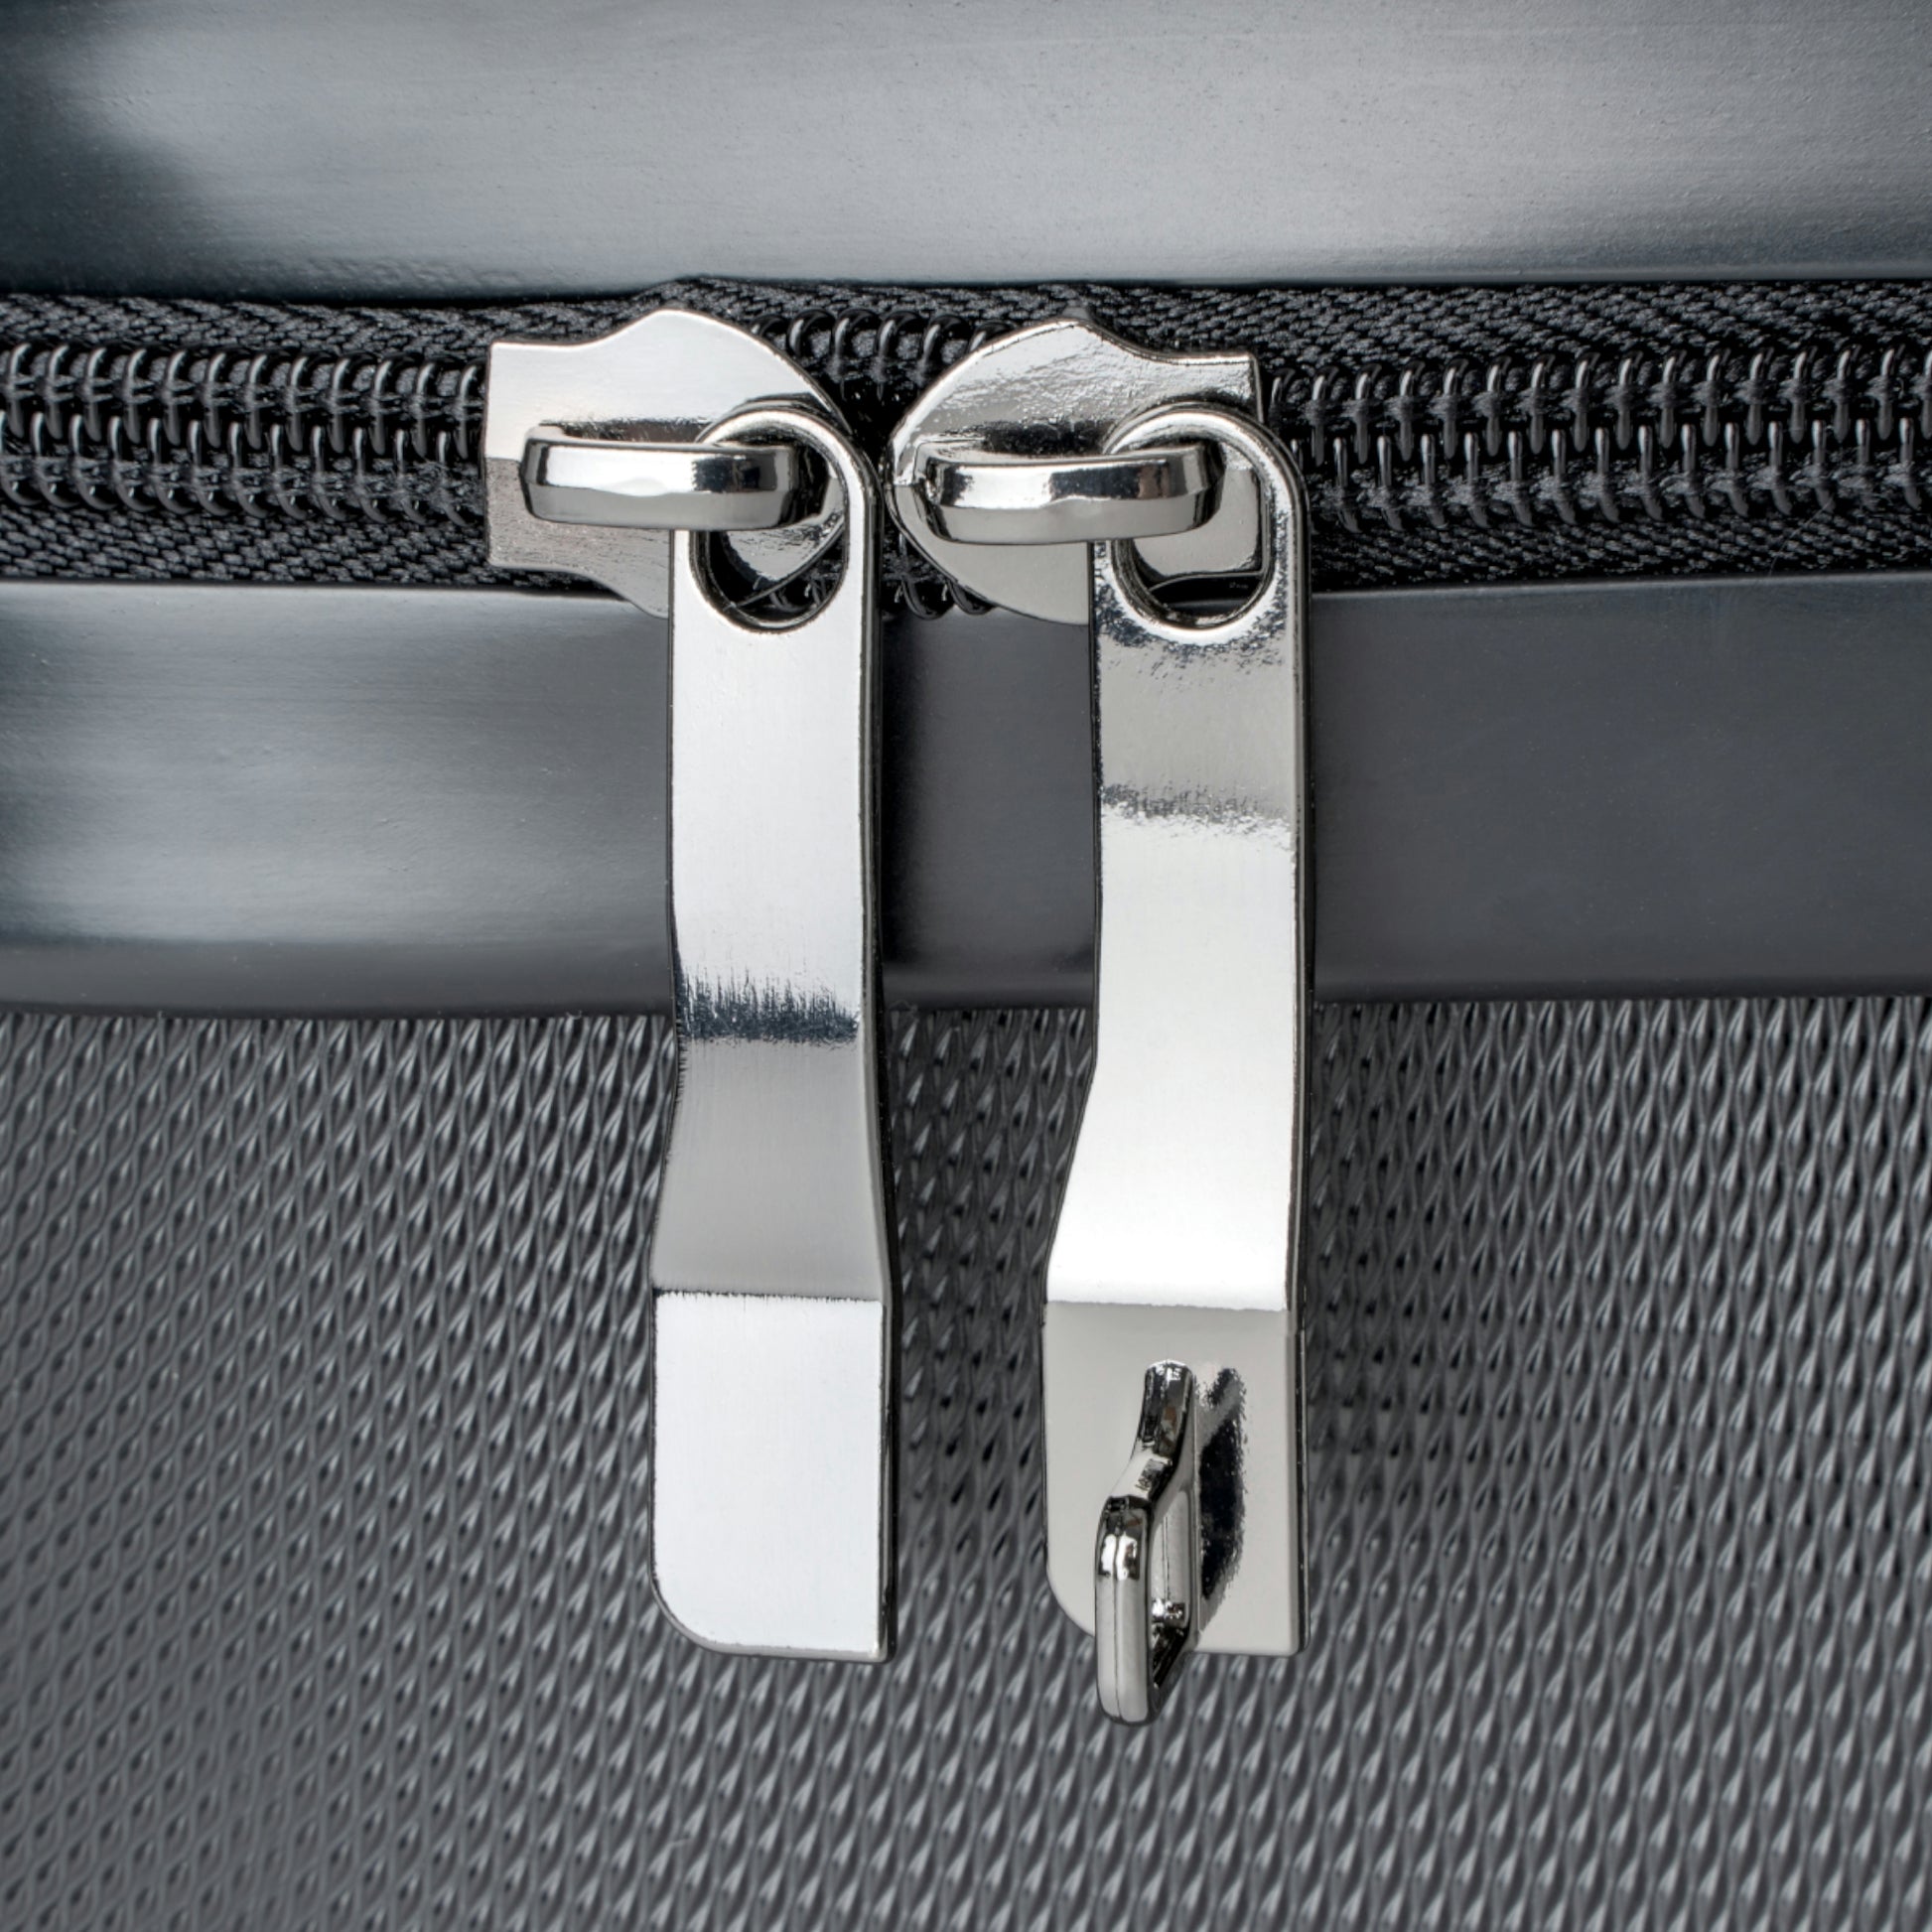 Geotrott Dallas Cowboys National Football League NFL Team Logo Cabin Suitcase Rolling Luggage Checking Bag